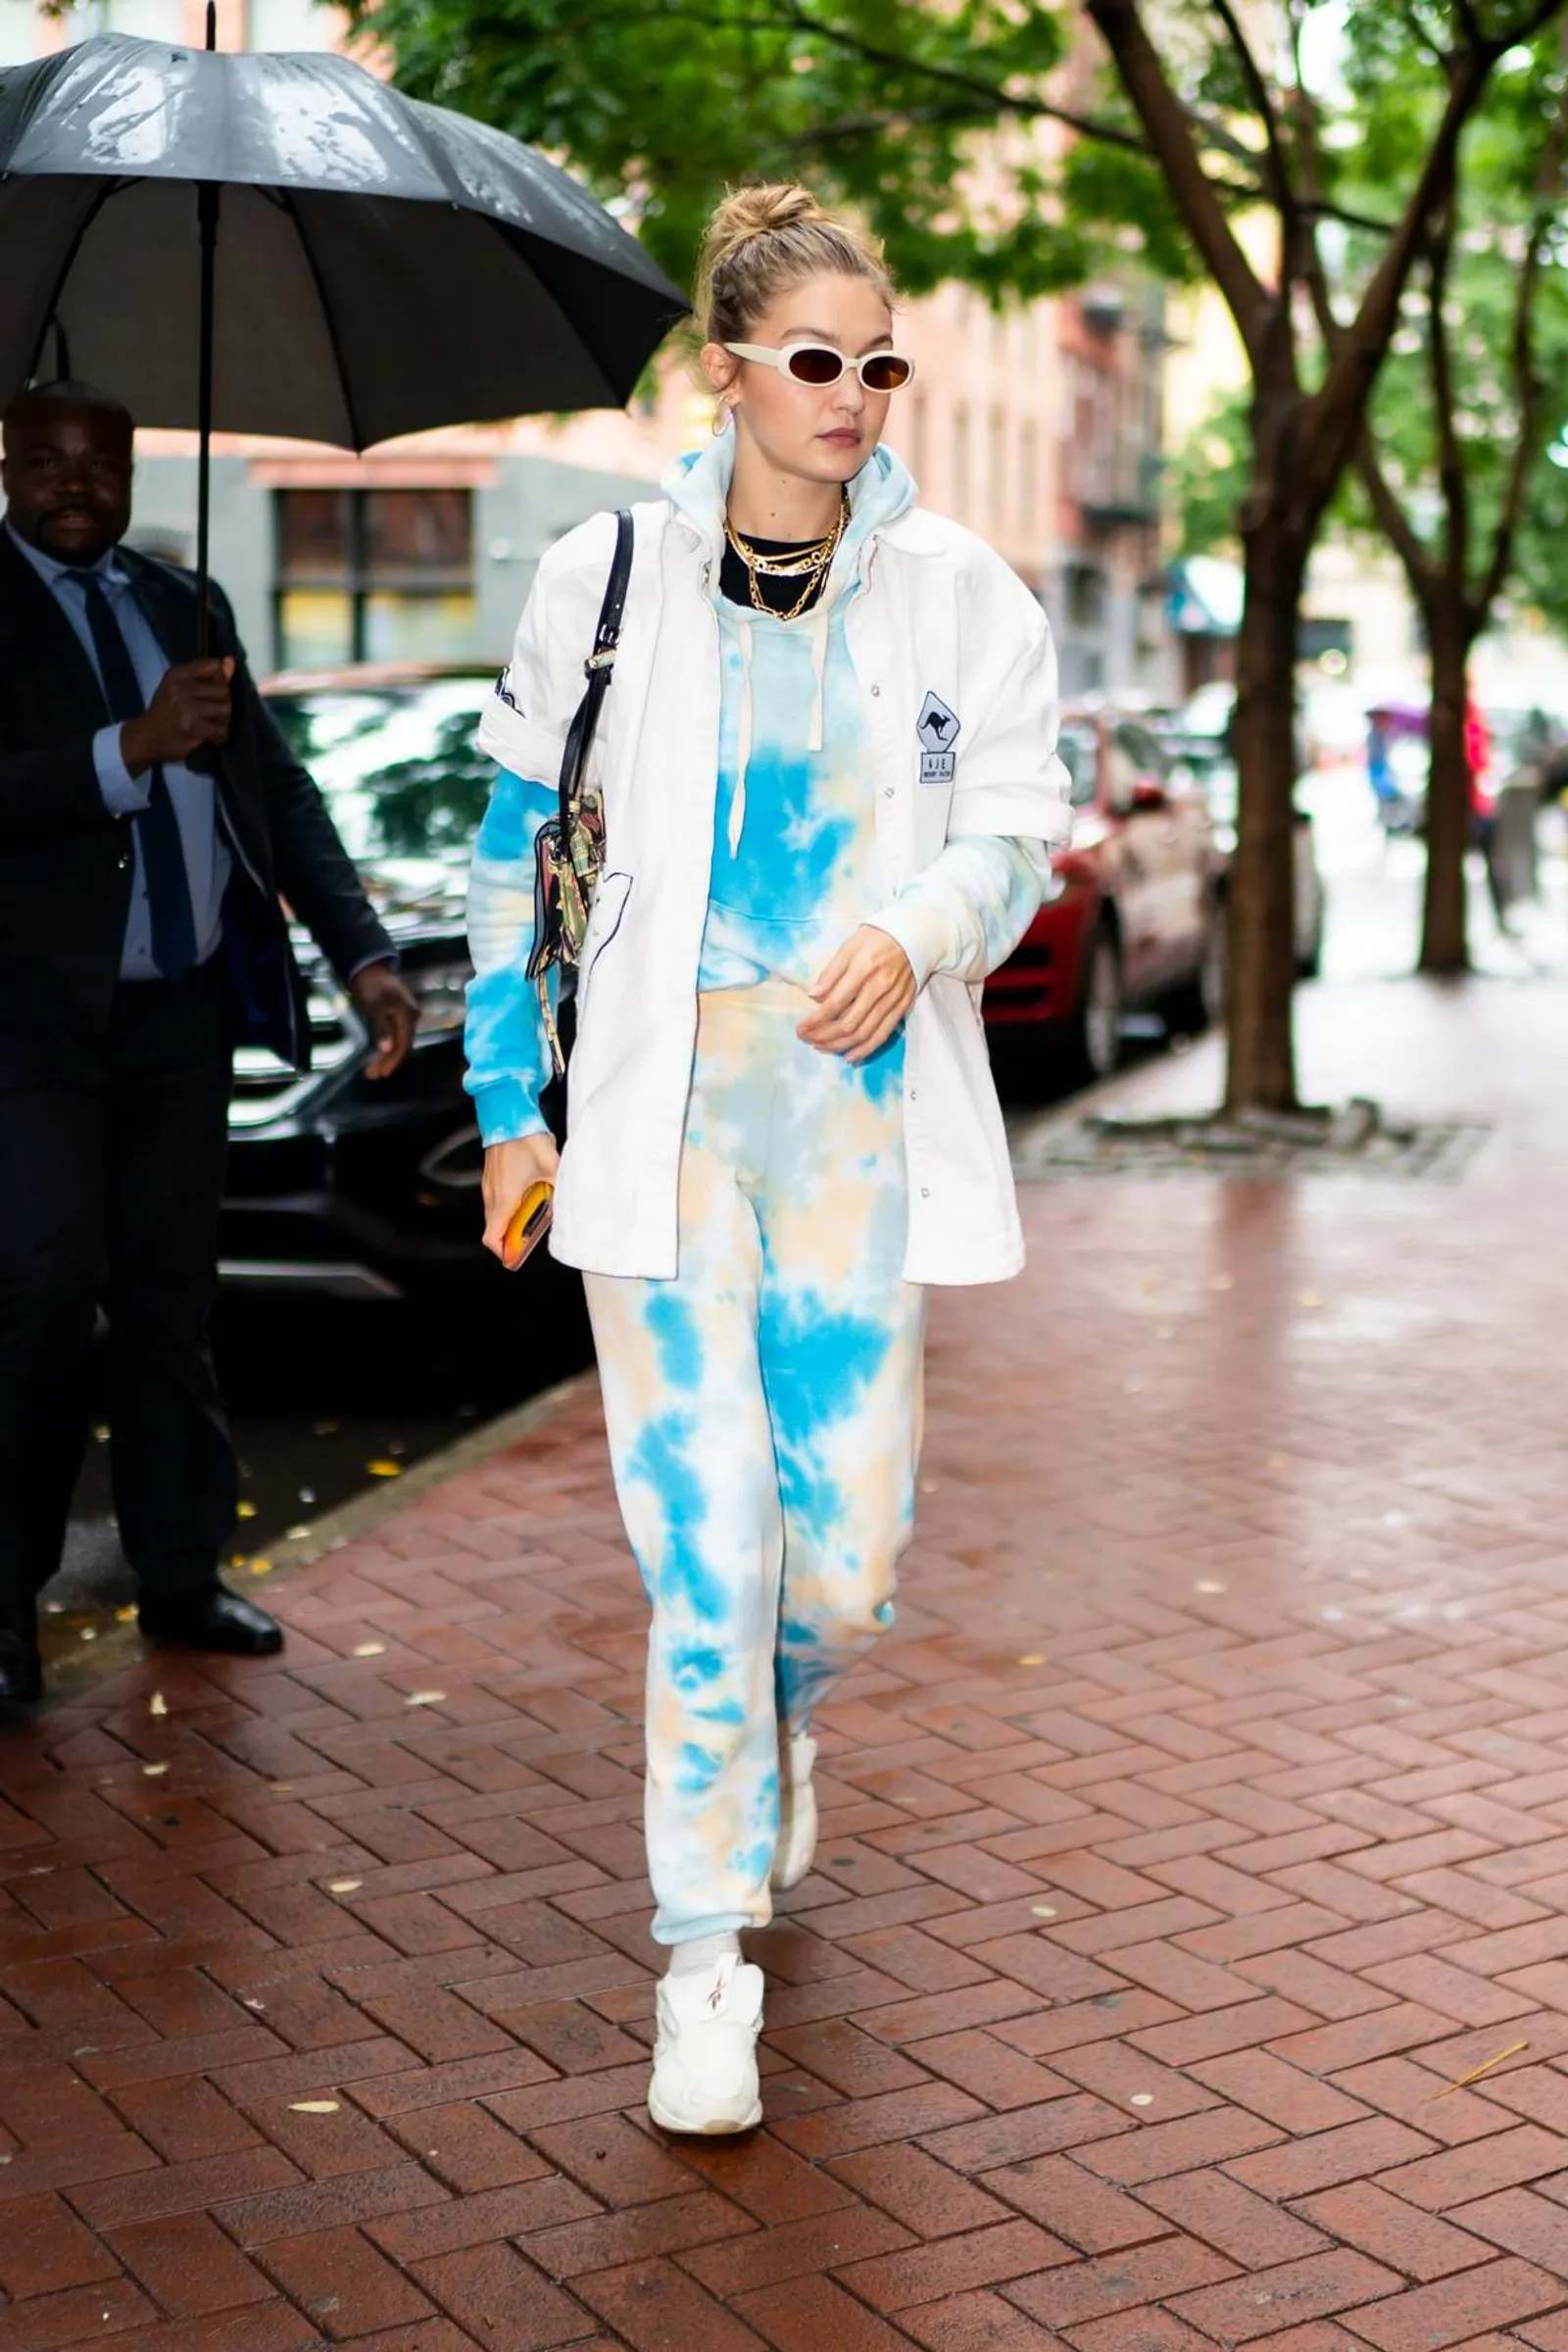 Steal The Look: Gaya Tie-dye ala Gigi Hadid